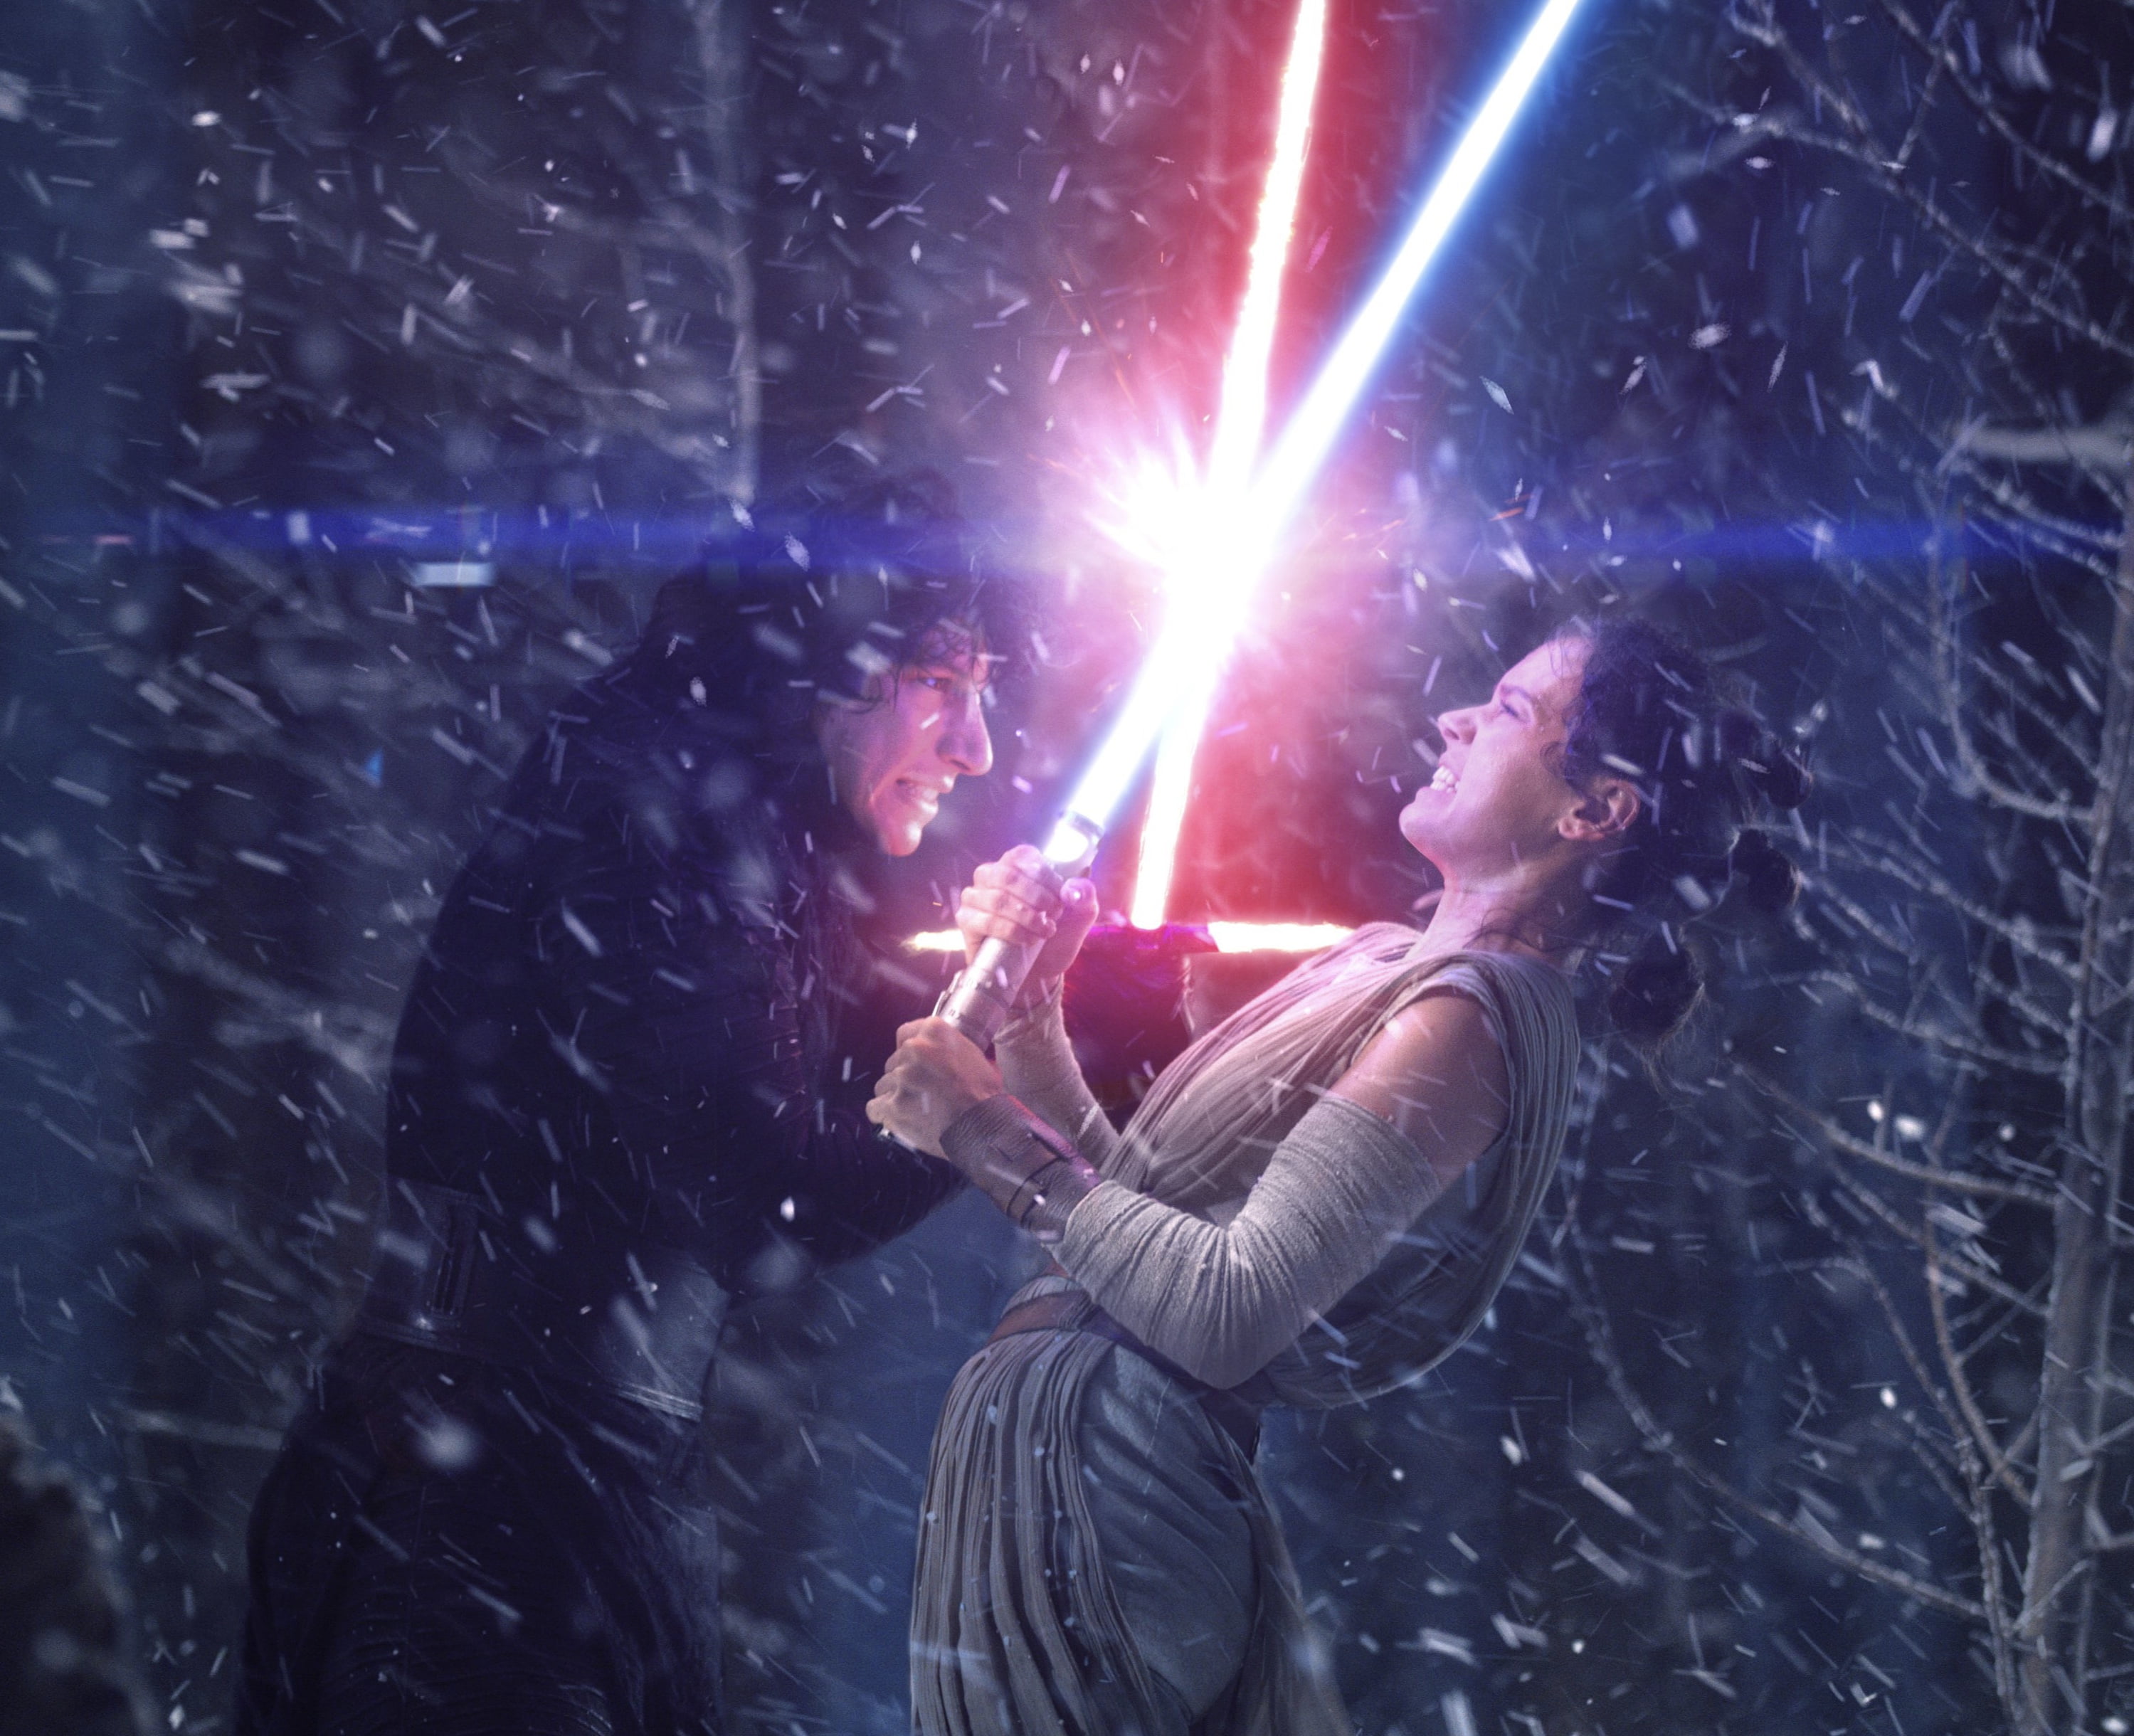 Star Wars Kylo Ren and woman fighting using light sabers movie scene